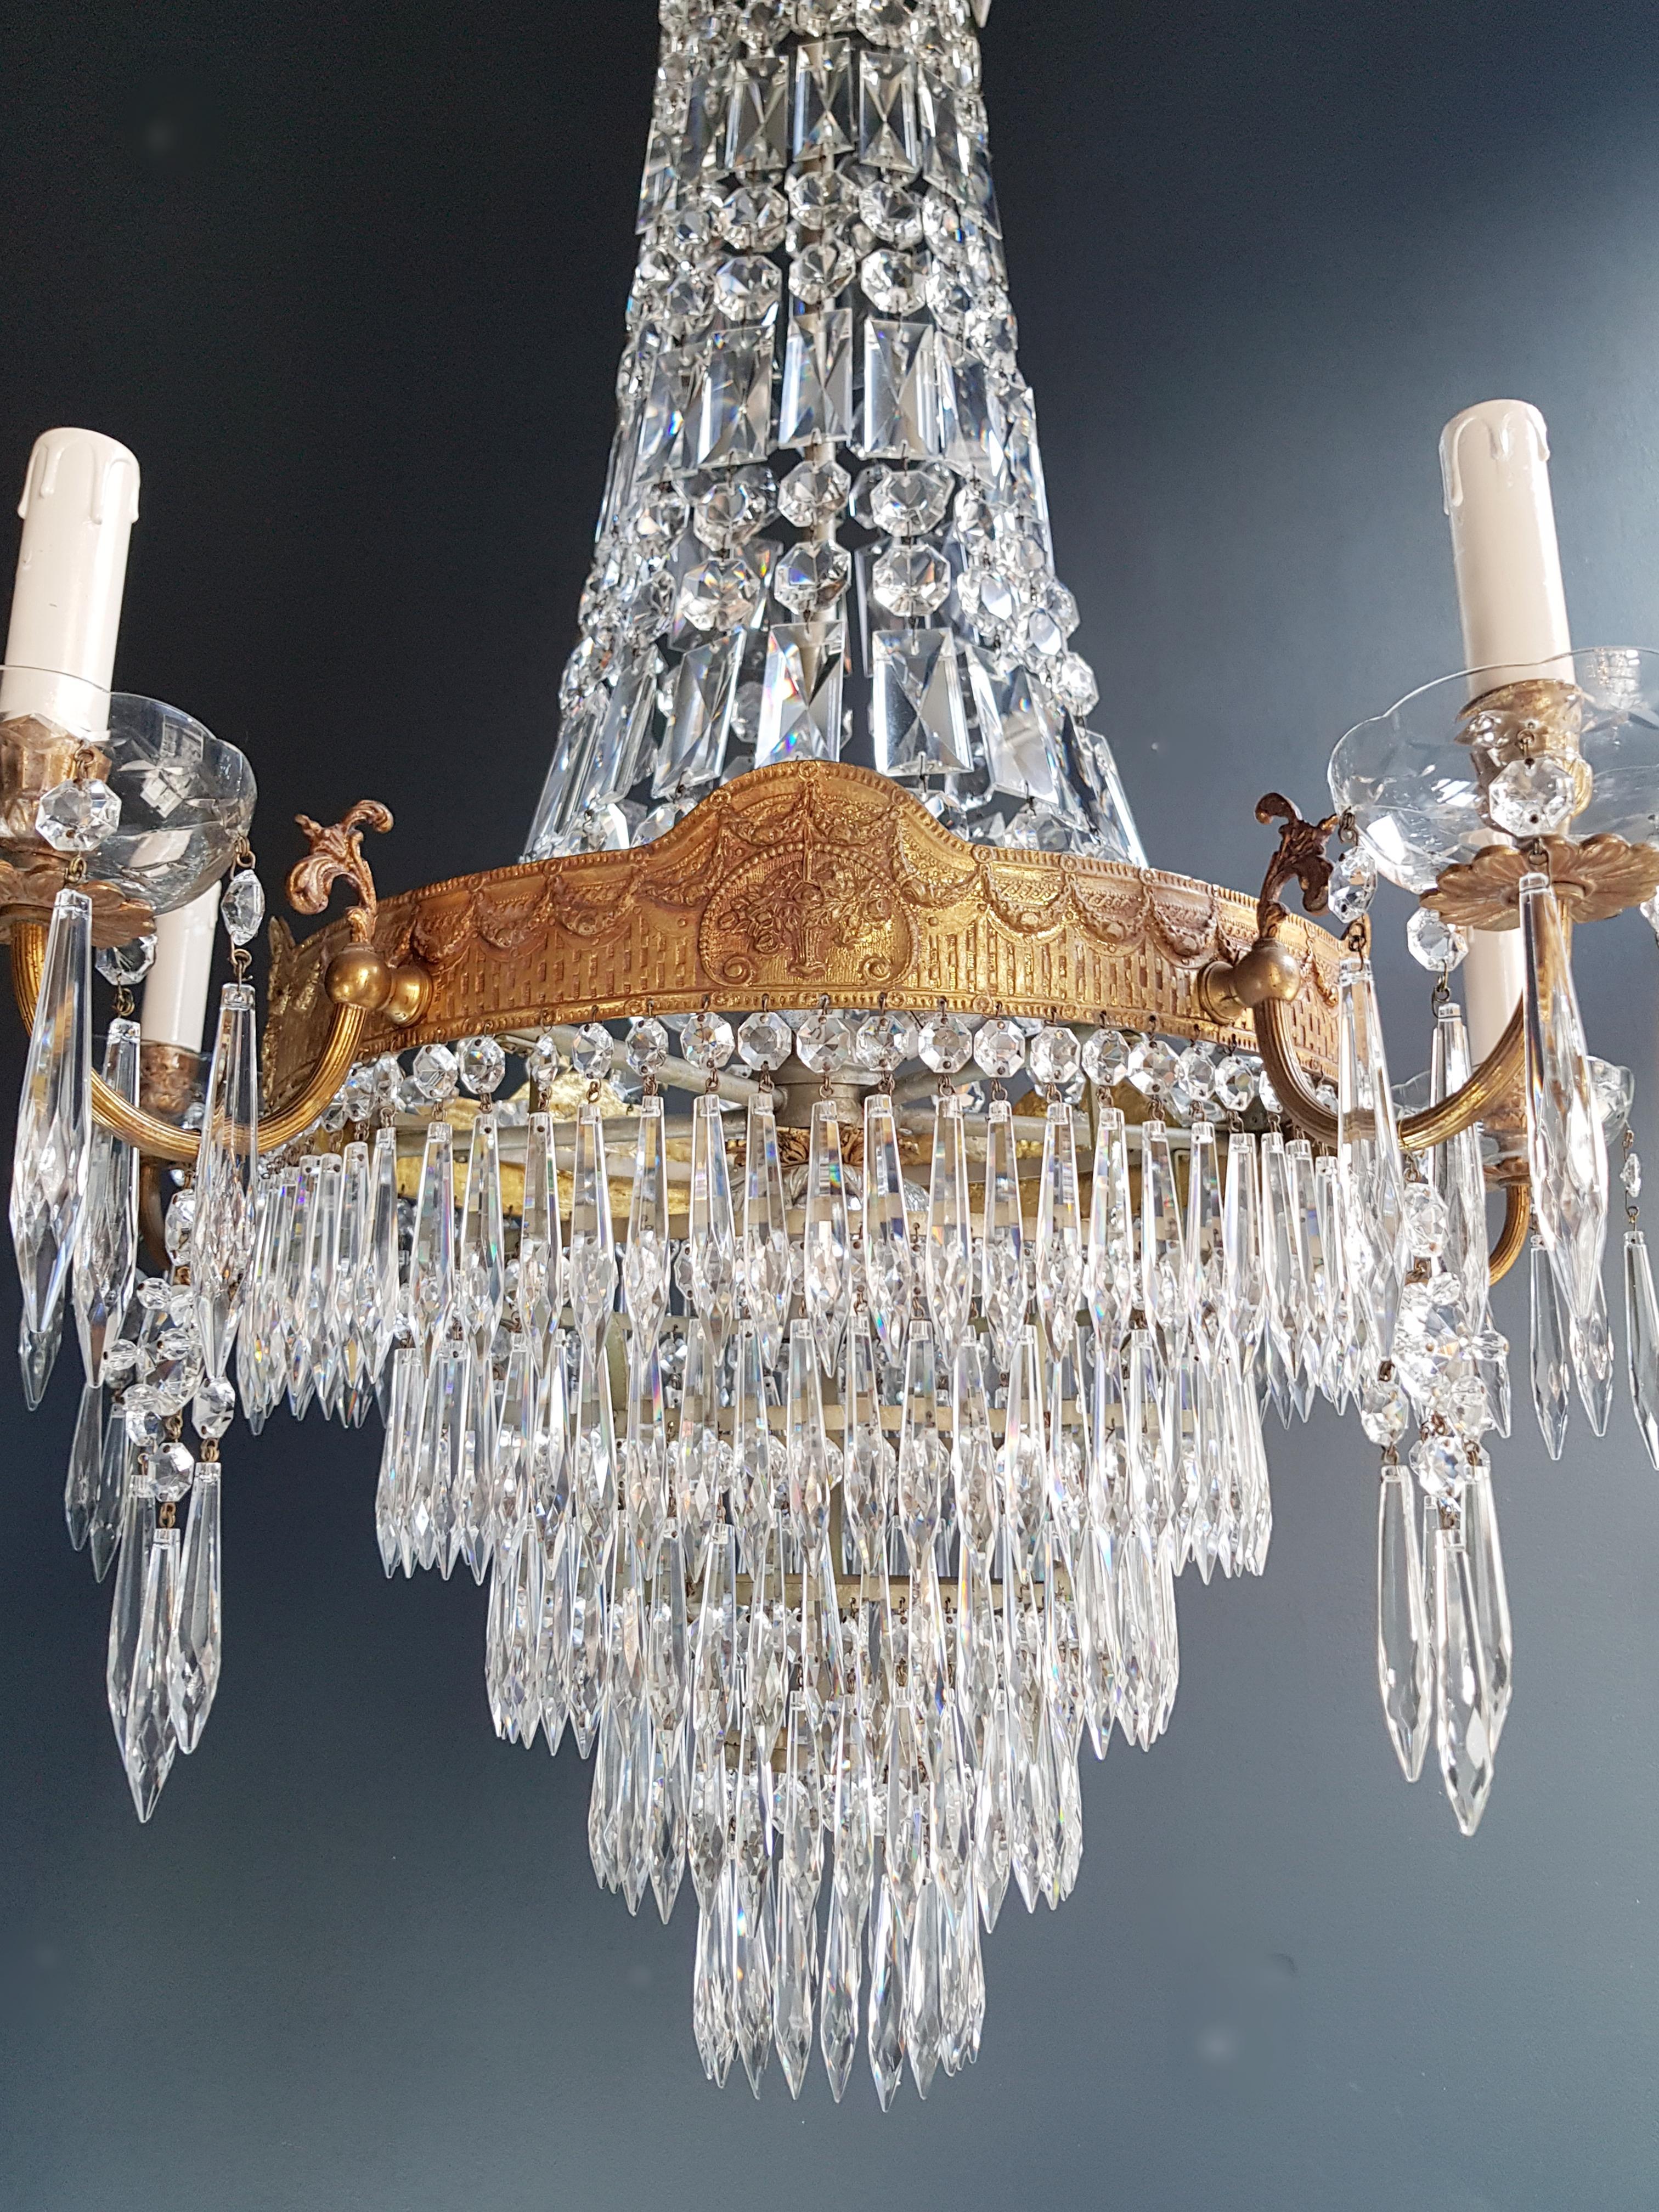 European Montgolfiè Empire Sac a Pearl Chandelier Crystal Lustre Ceiling Lamp Antique WoW